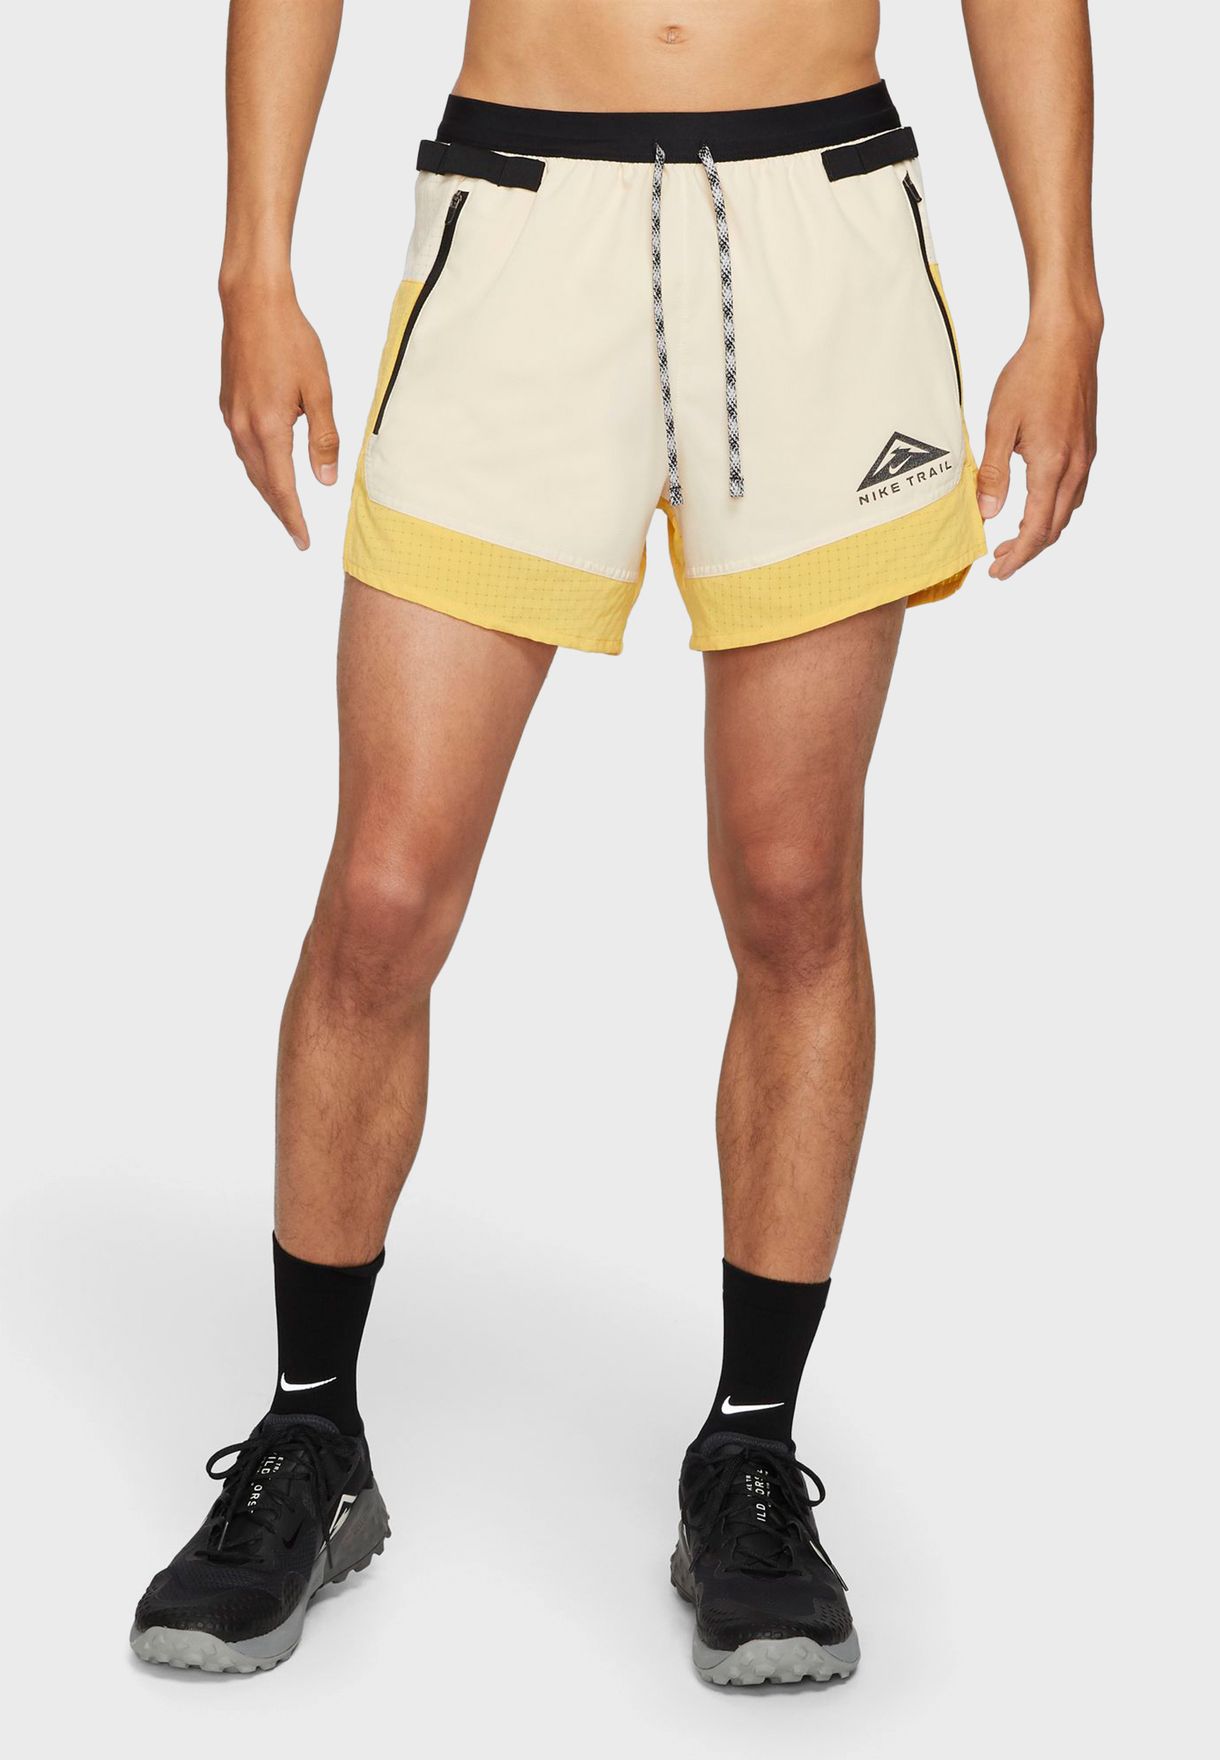 nike men's dri fit flex shorts